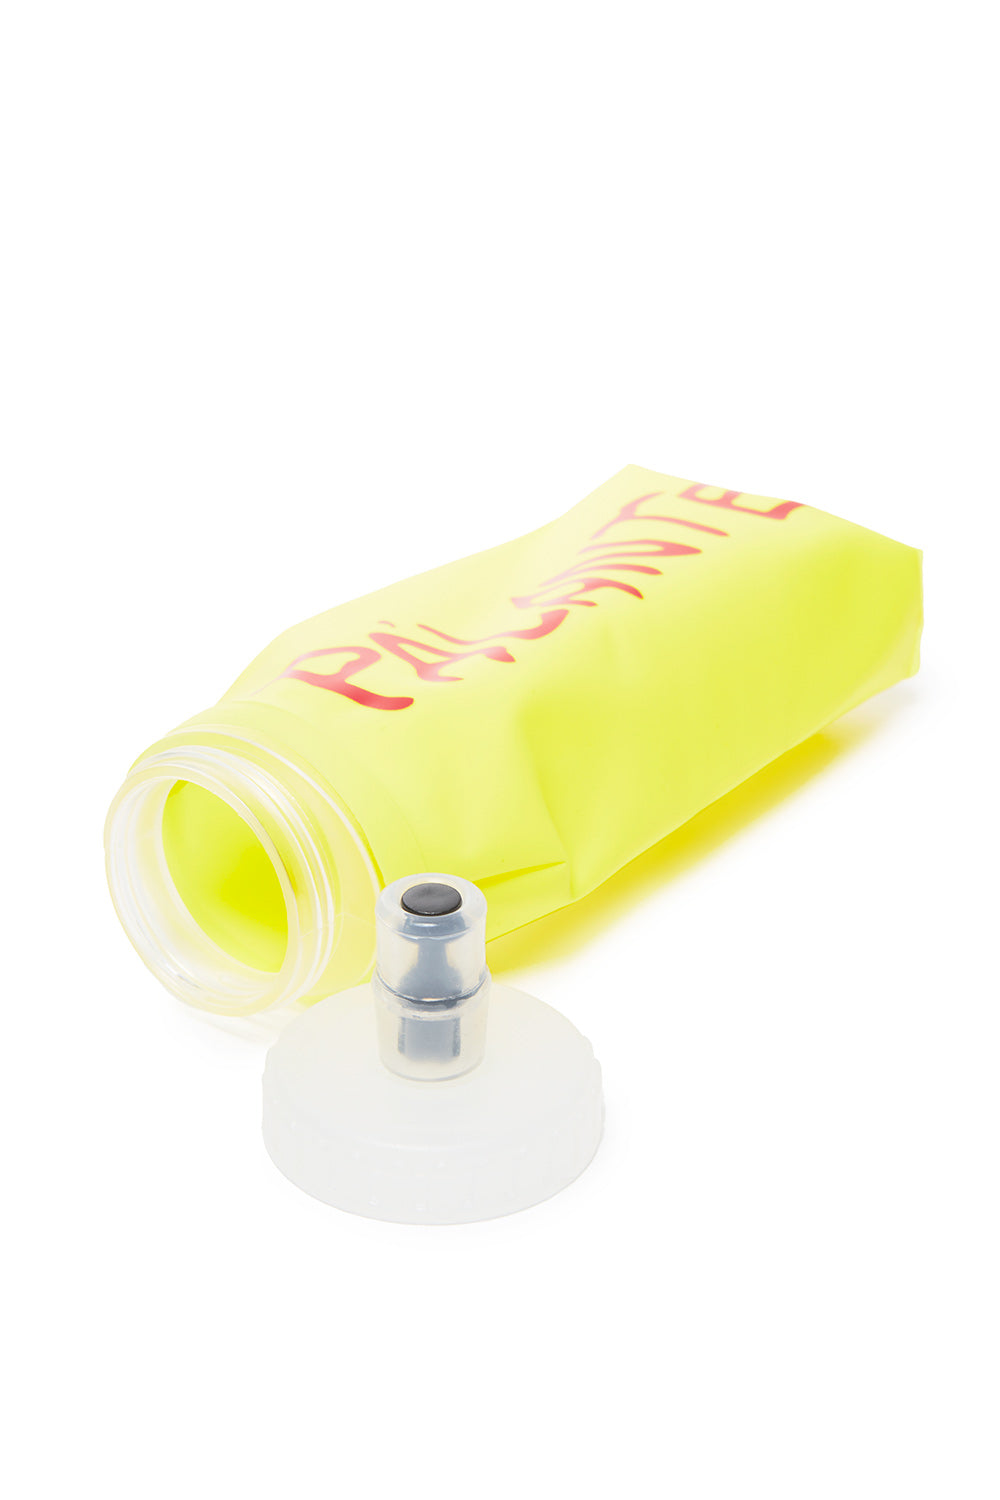 Pa'lante Packs Wide Water Bottle - Yellow